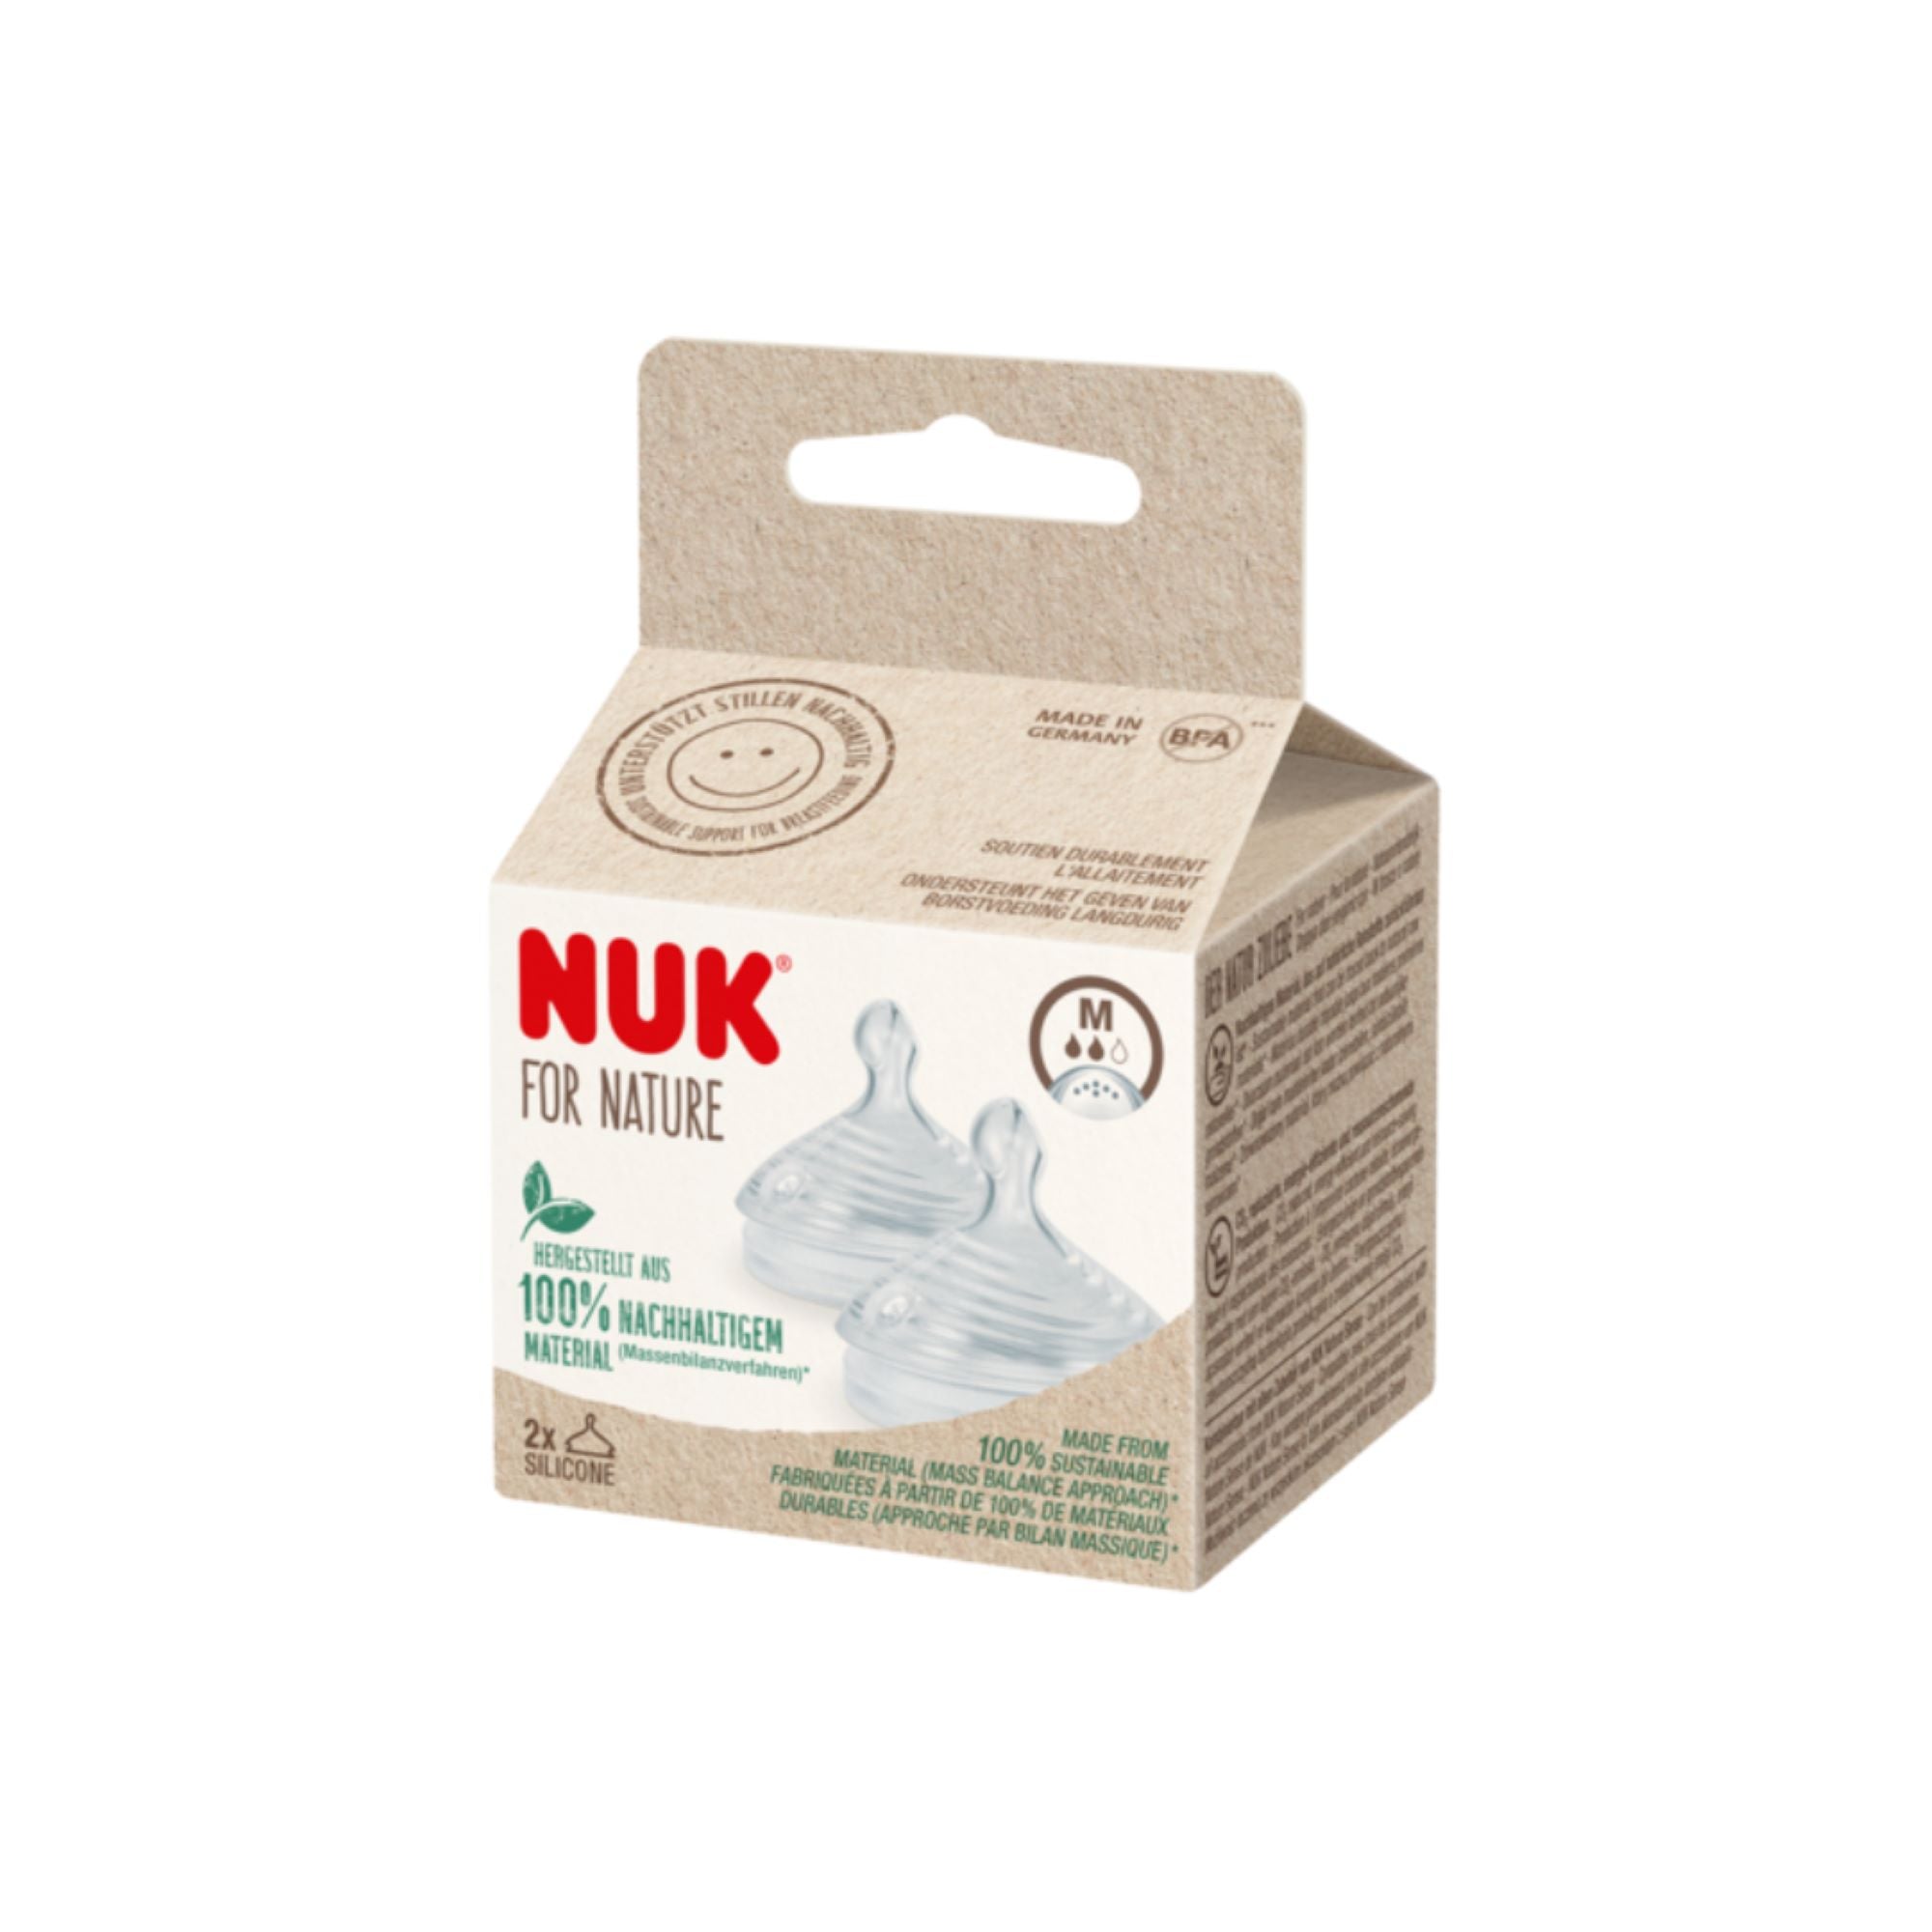 NUK For Nature Medium Teat 2 Pack